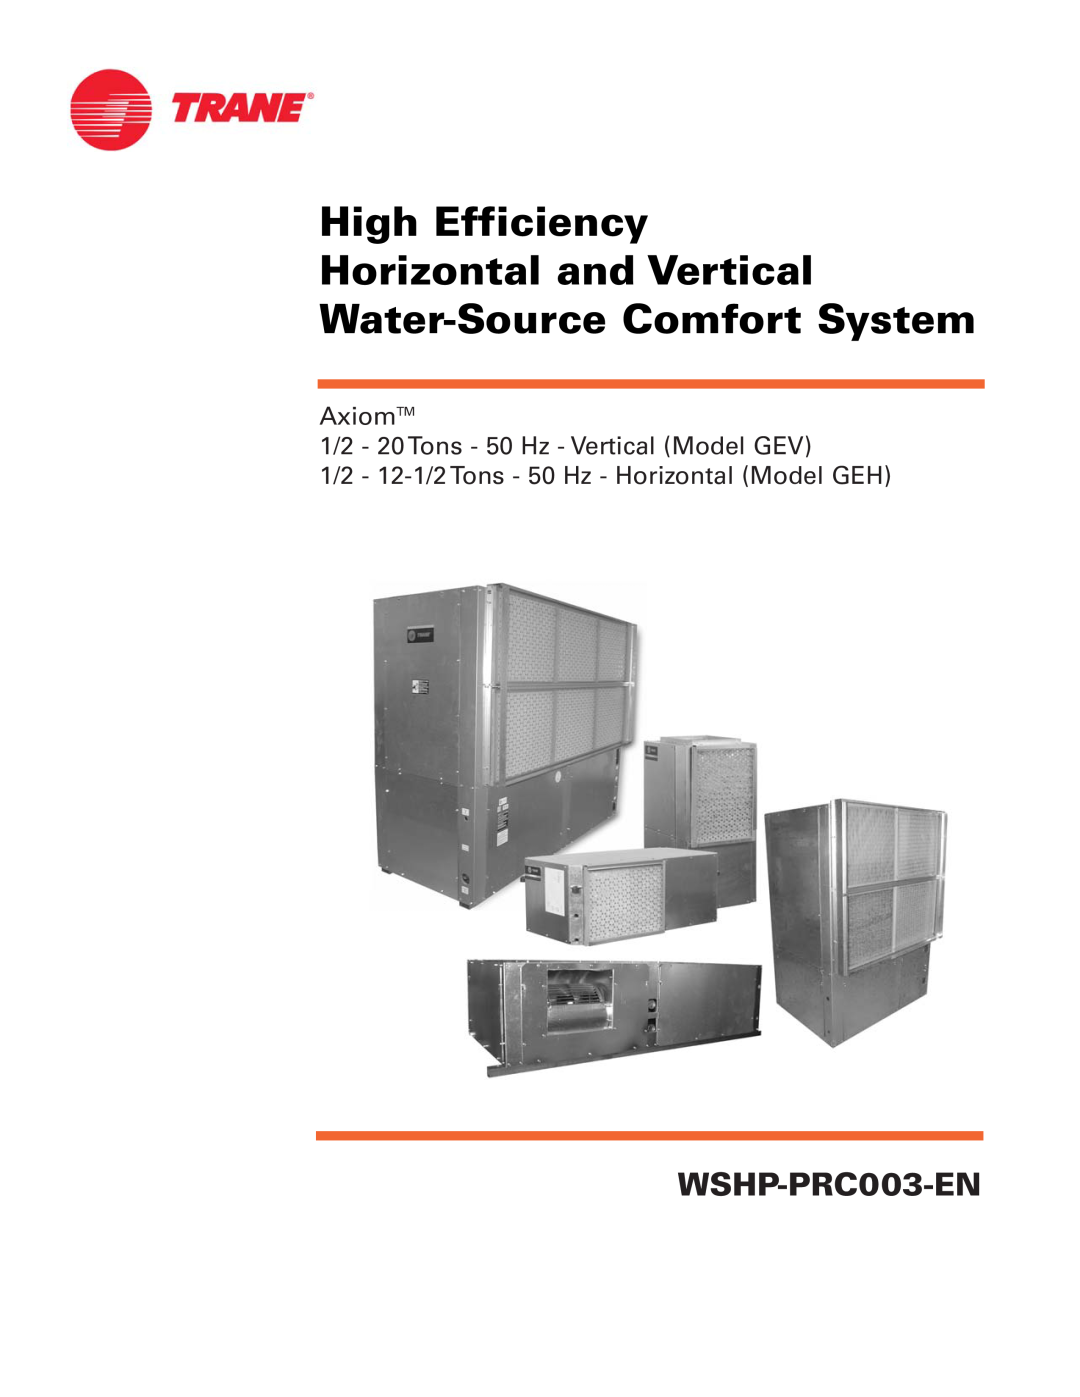 Trane 120 GEH manual High Efficiency Horizontal and Vertical, Water-SourceComfort System, WSHP-PRC003-EN, AxiomTM 